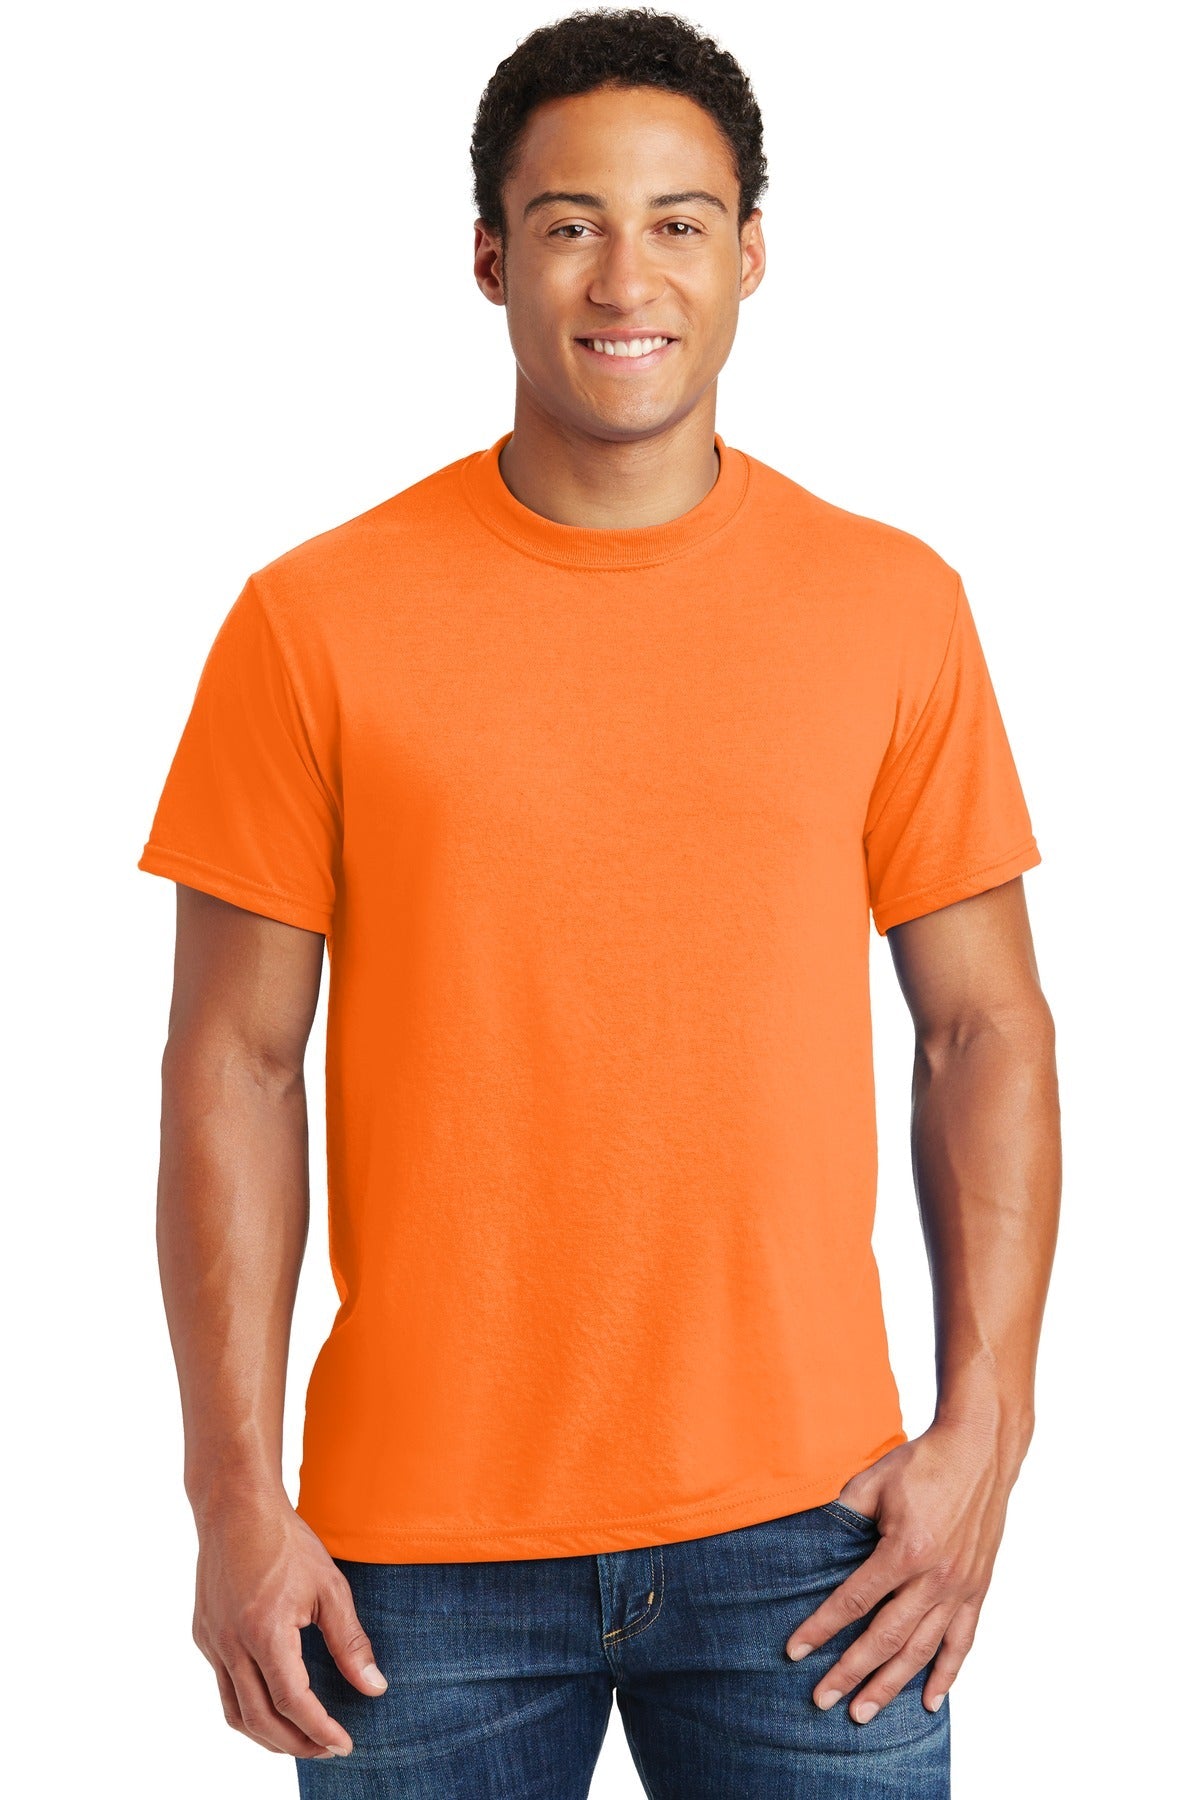 JERZEES® Dri-Power® 100% Polyester T-Shirt. 21M - DFW Impression